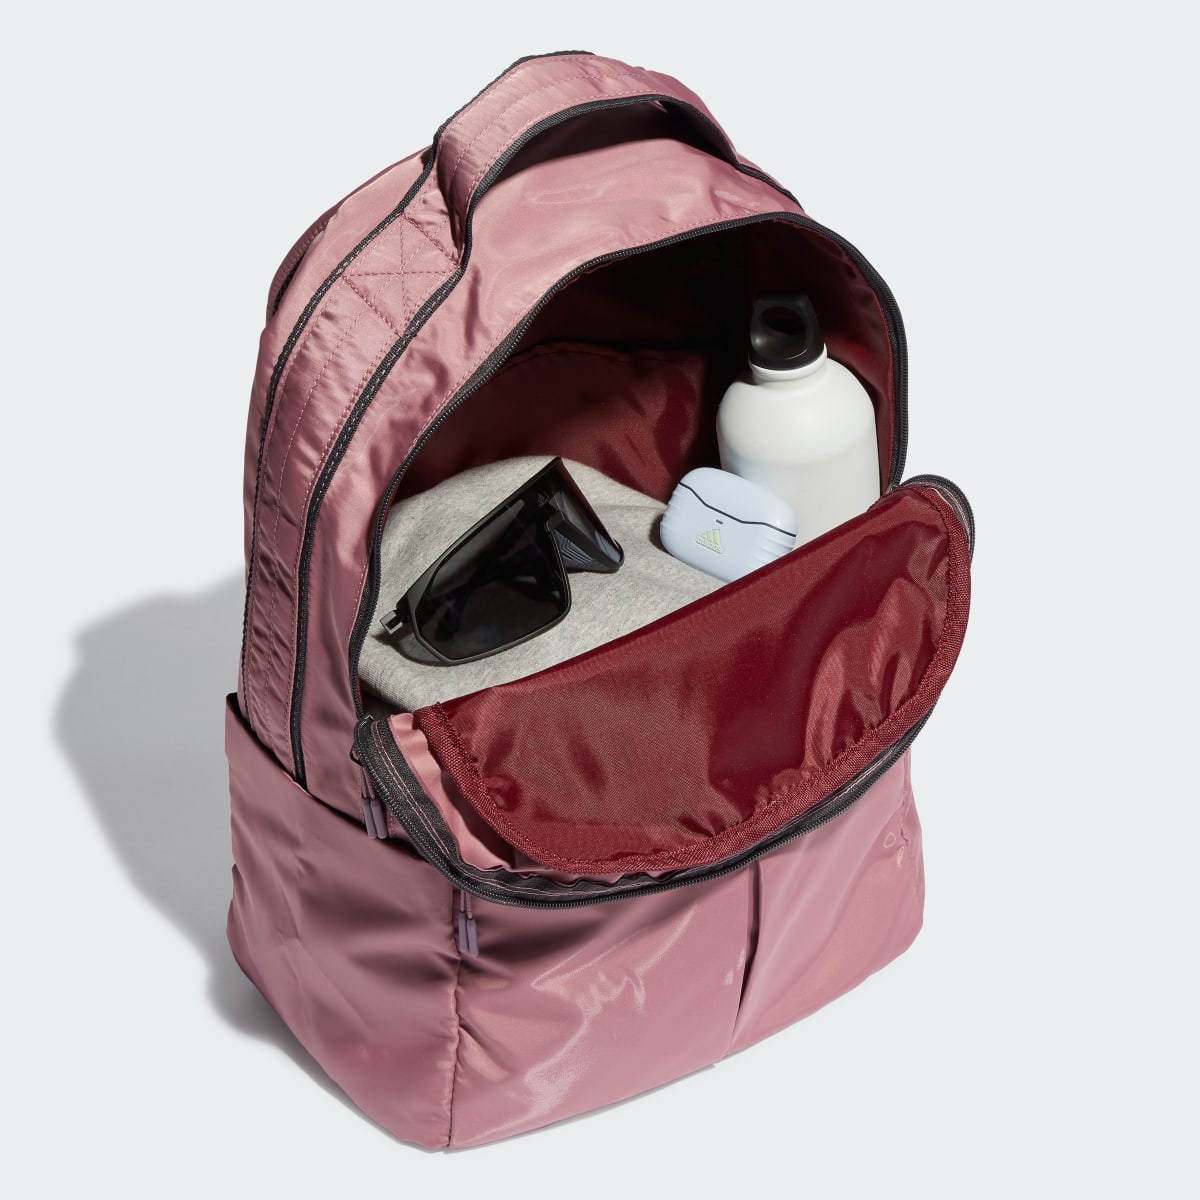 Adidas Yoga Backpack. 4